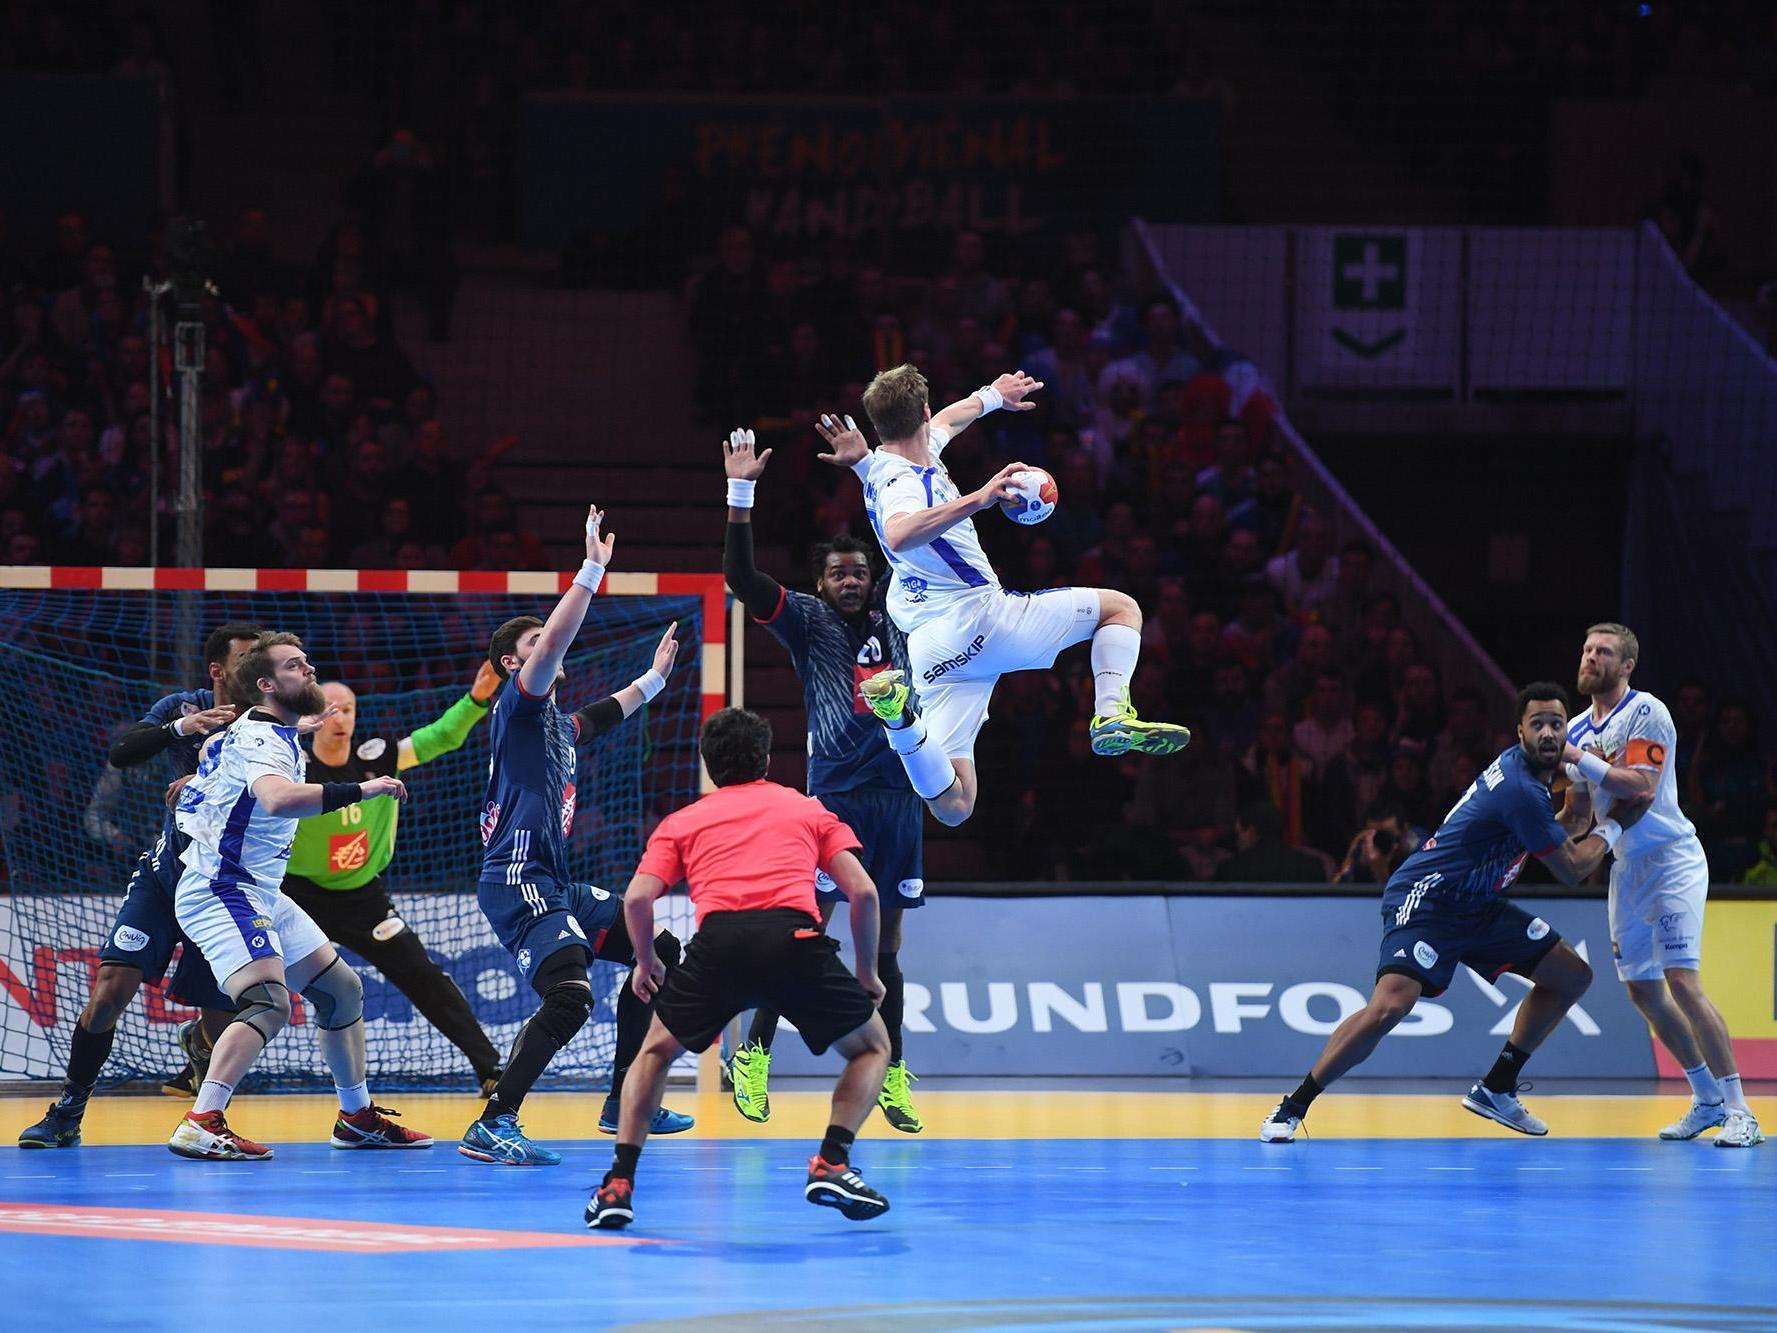 Handball World Championship 2017